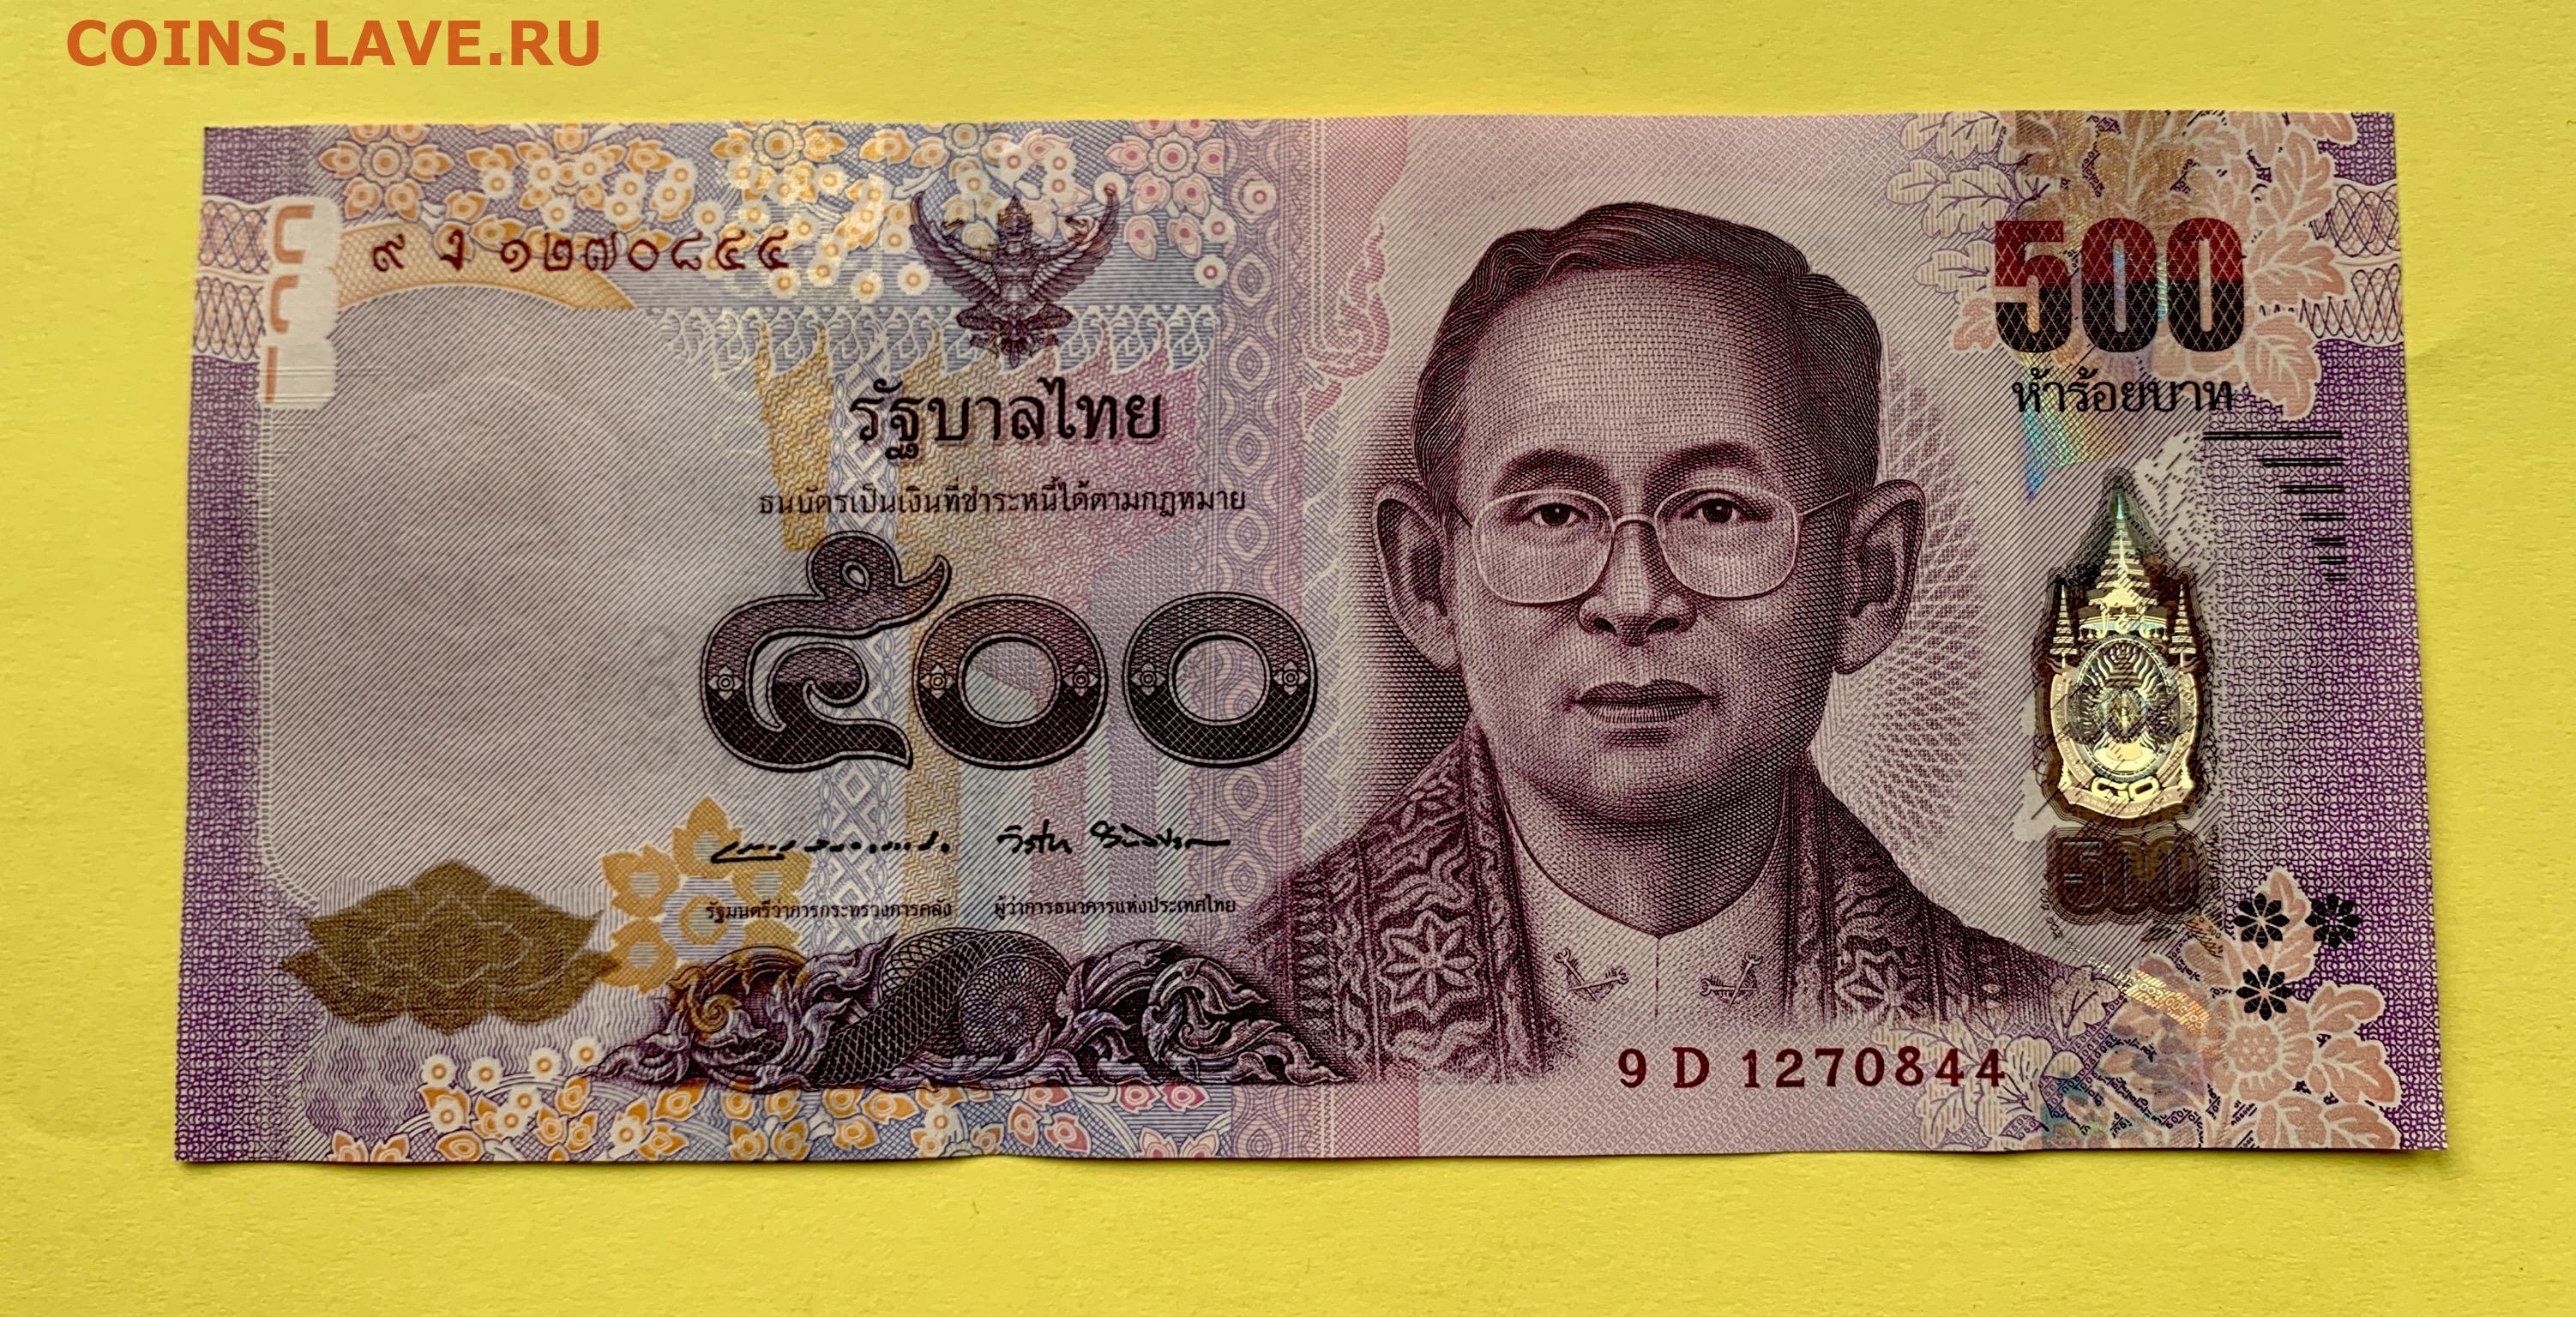 500 батов в рублях. 500 Бат. Таиландские 500 бат. Как выглядит 500 бат. Банкнота 20 бат Тайланд.